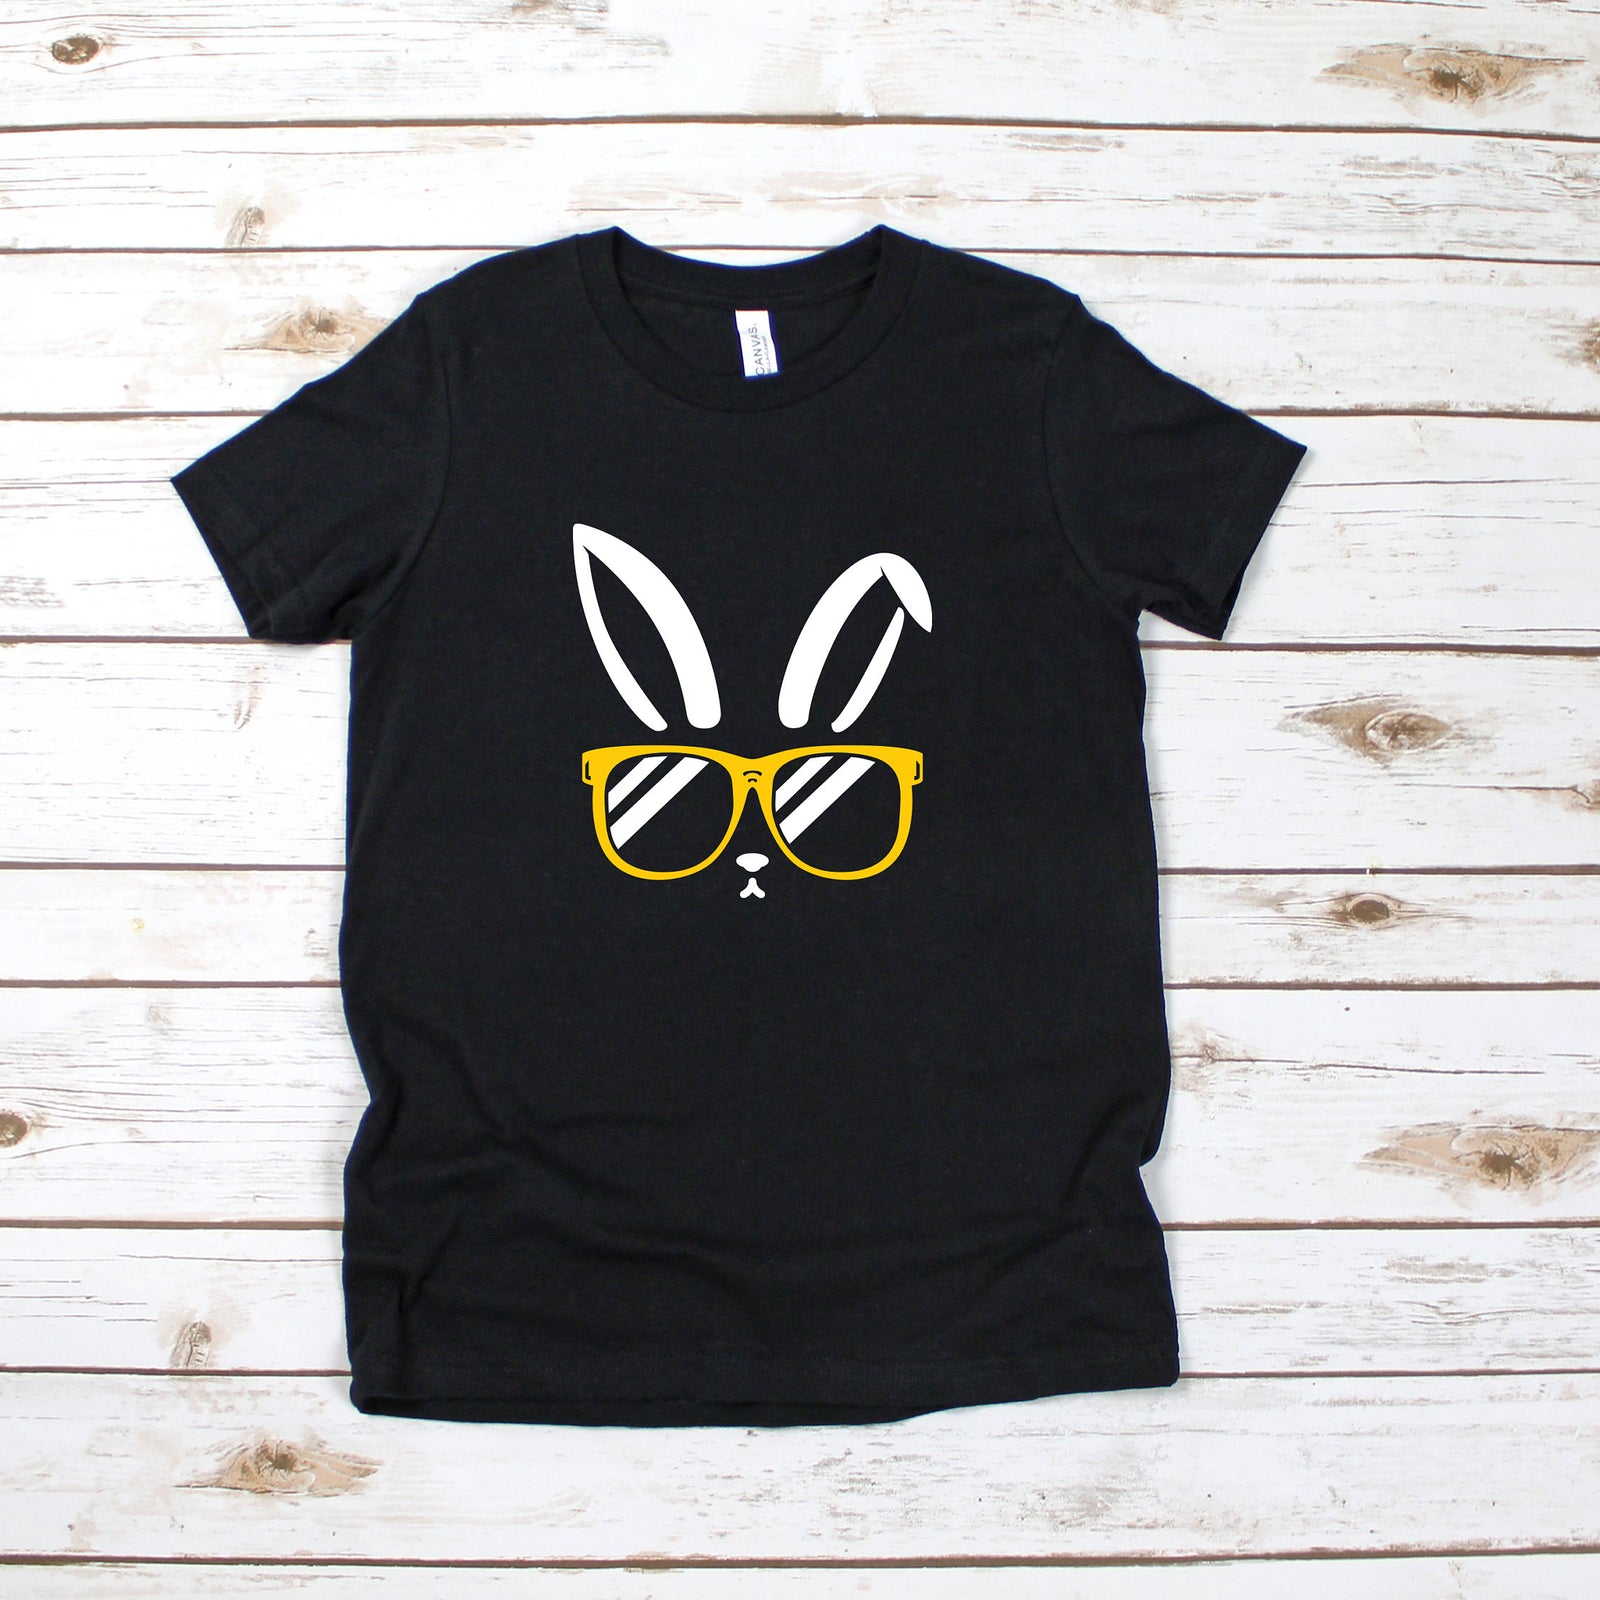 Cool Bunny Wearing Sunglasses Shirt - Kids Easter Shirt - Boy or Girl Bunny Marsh mellow Shirt